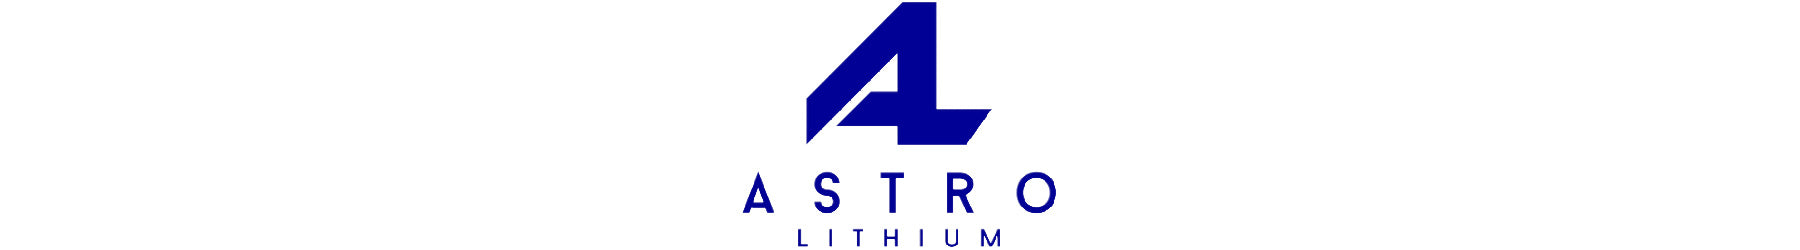 Astro Lithium Warranty